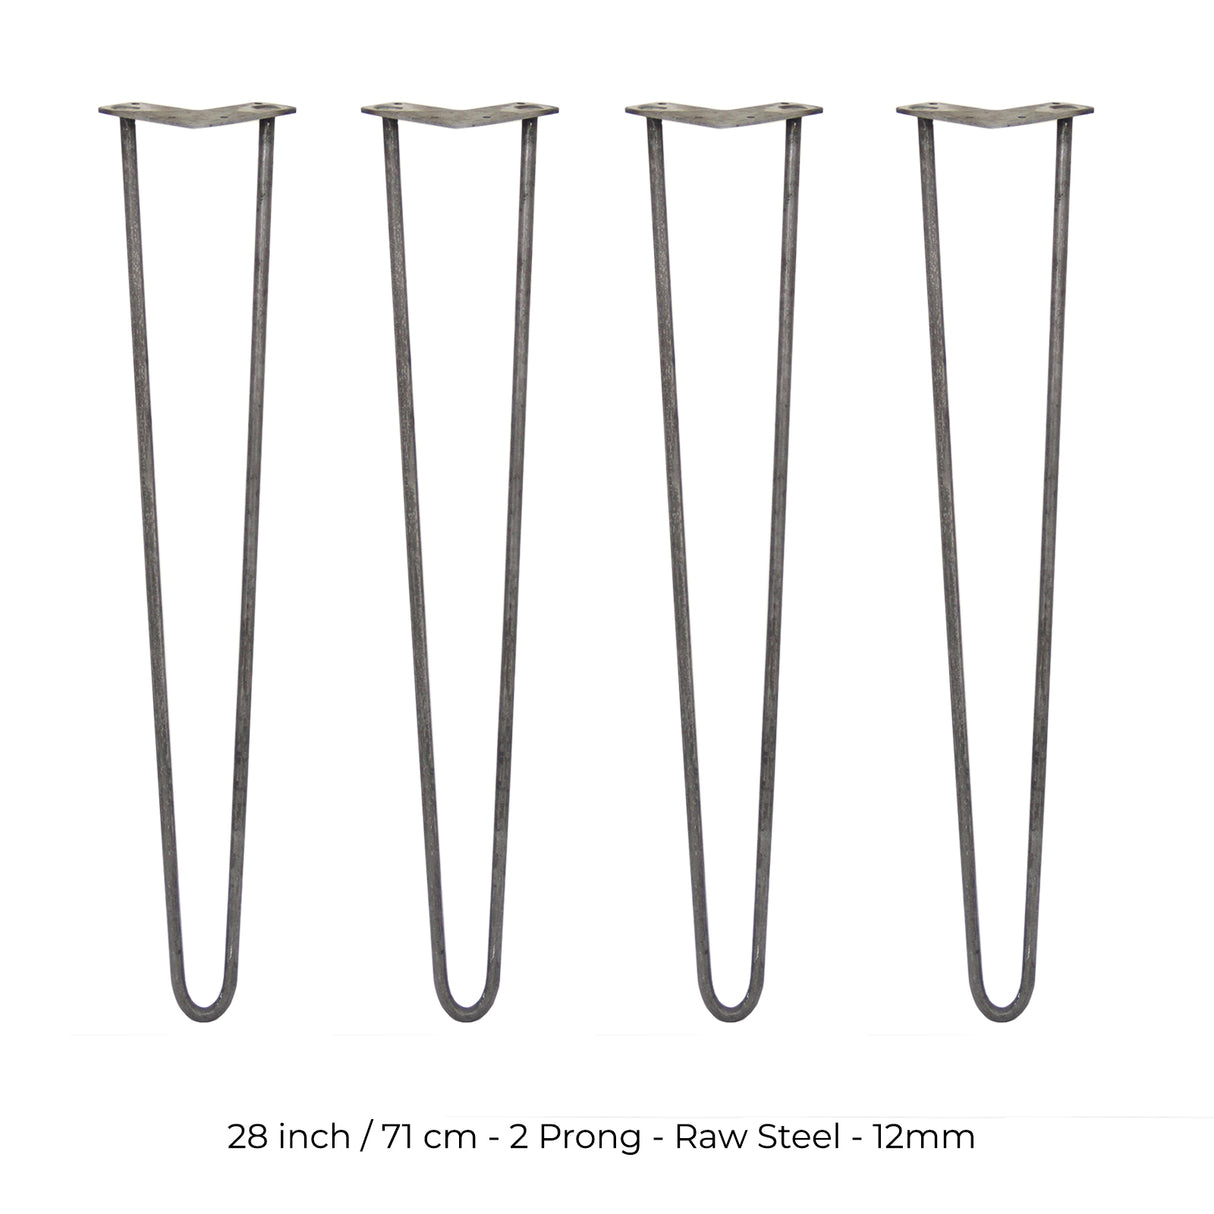 4 x 28" Hairpin Legs - 2 Prong - 12mm - Raw Steel